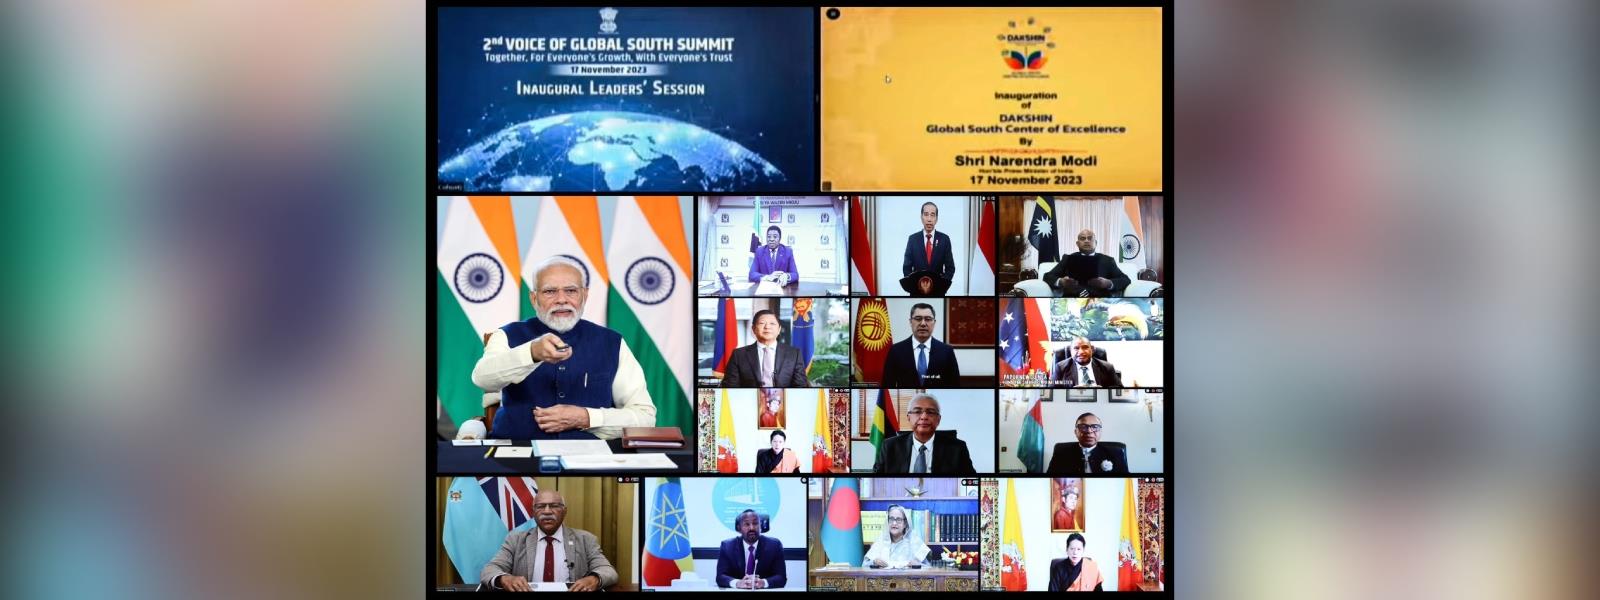 Prime Minister Shri Narendra Modi virtually inaugurated DAKSHIN - Global South Centre of Excellence